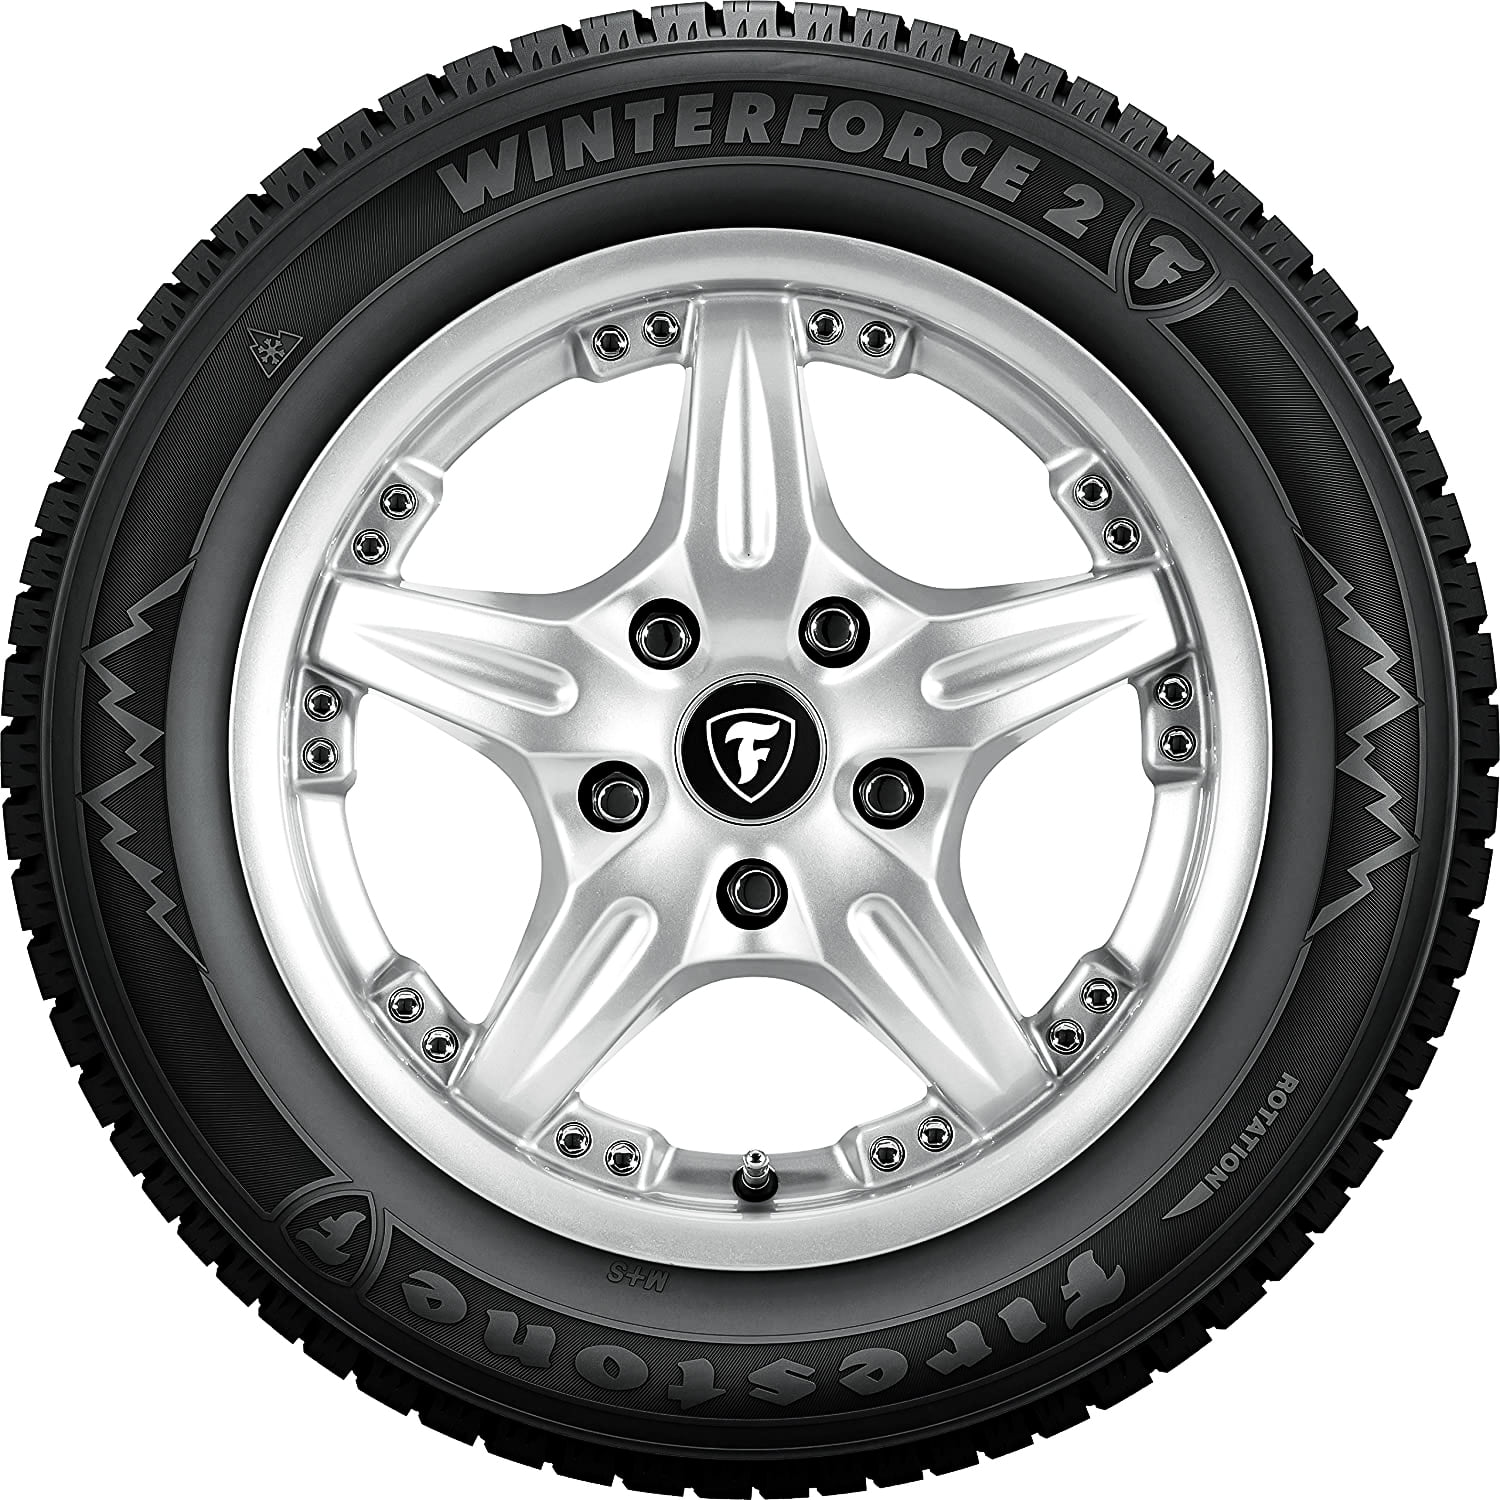 One New 1 New Firestone Winterforce 2 205/55R16 91S Winter Snow Tire